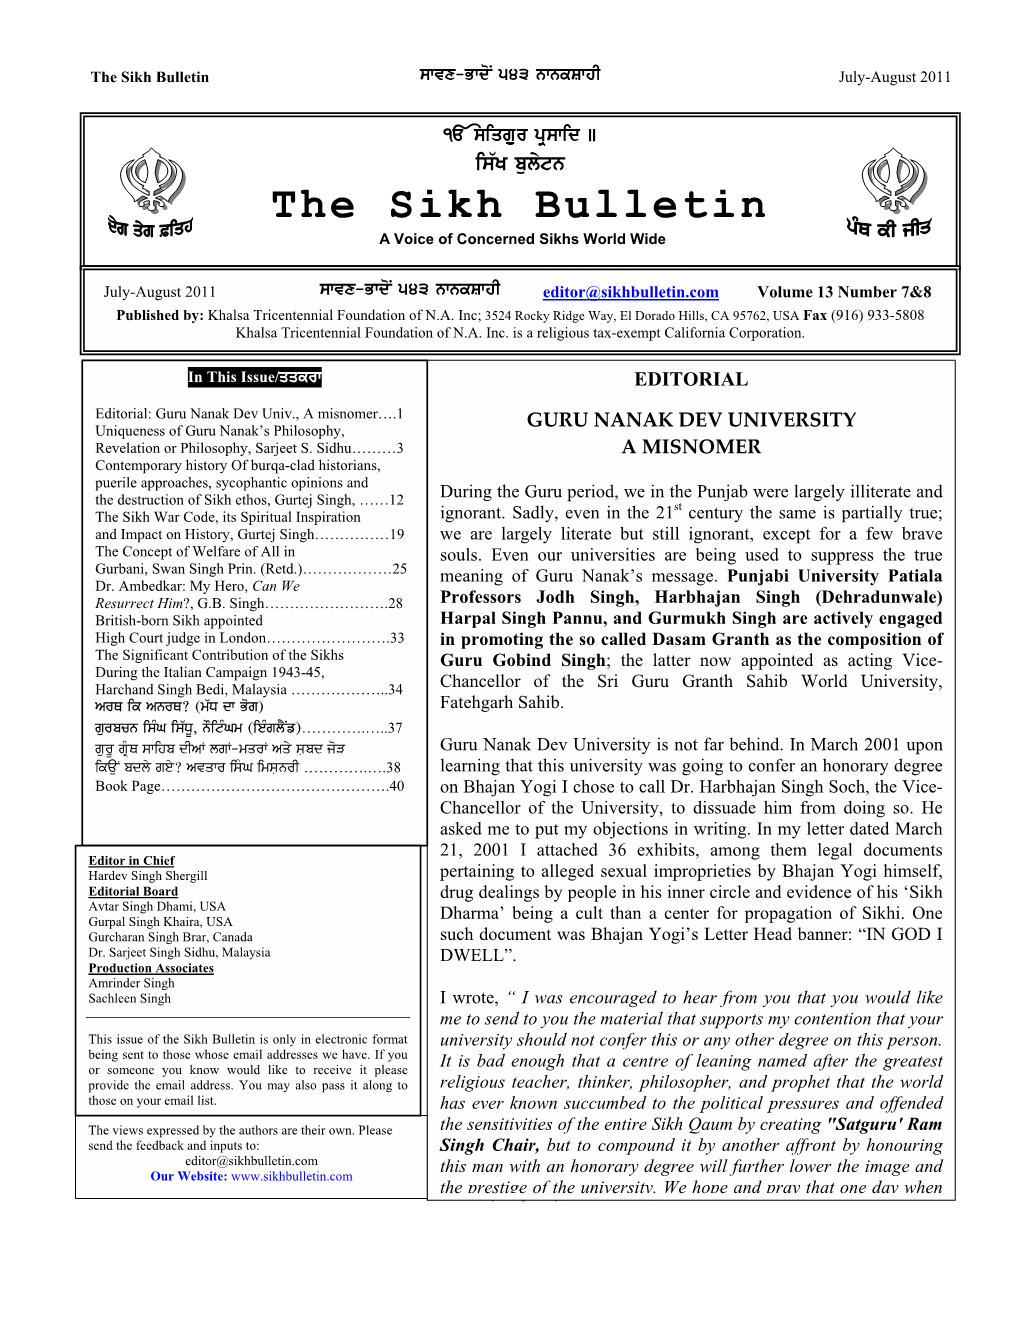 The Sikh Bulletin Swvx-Bwdon 543 Nwnkswhi July-August 2011